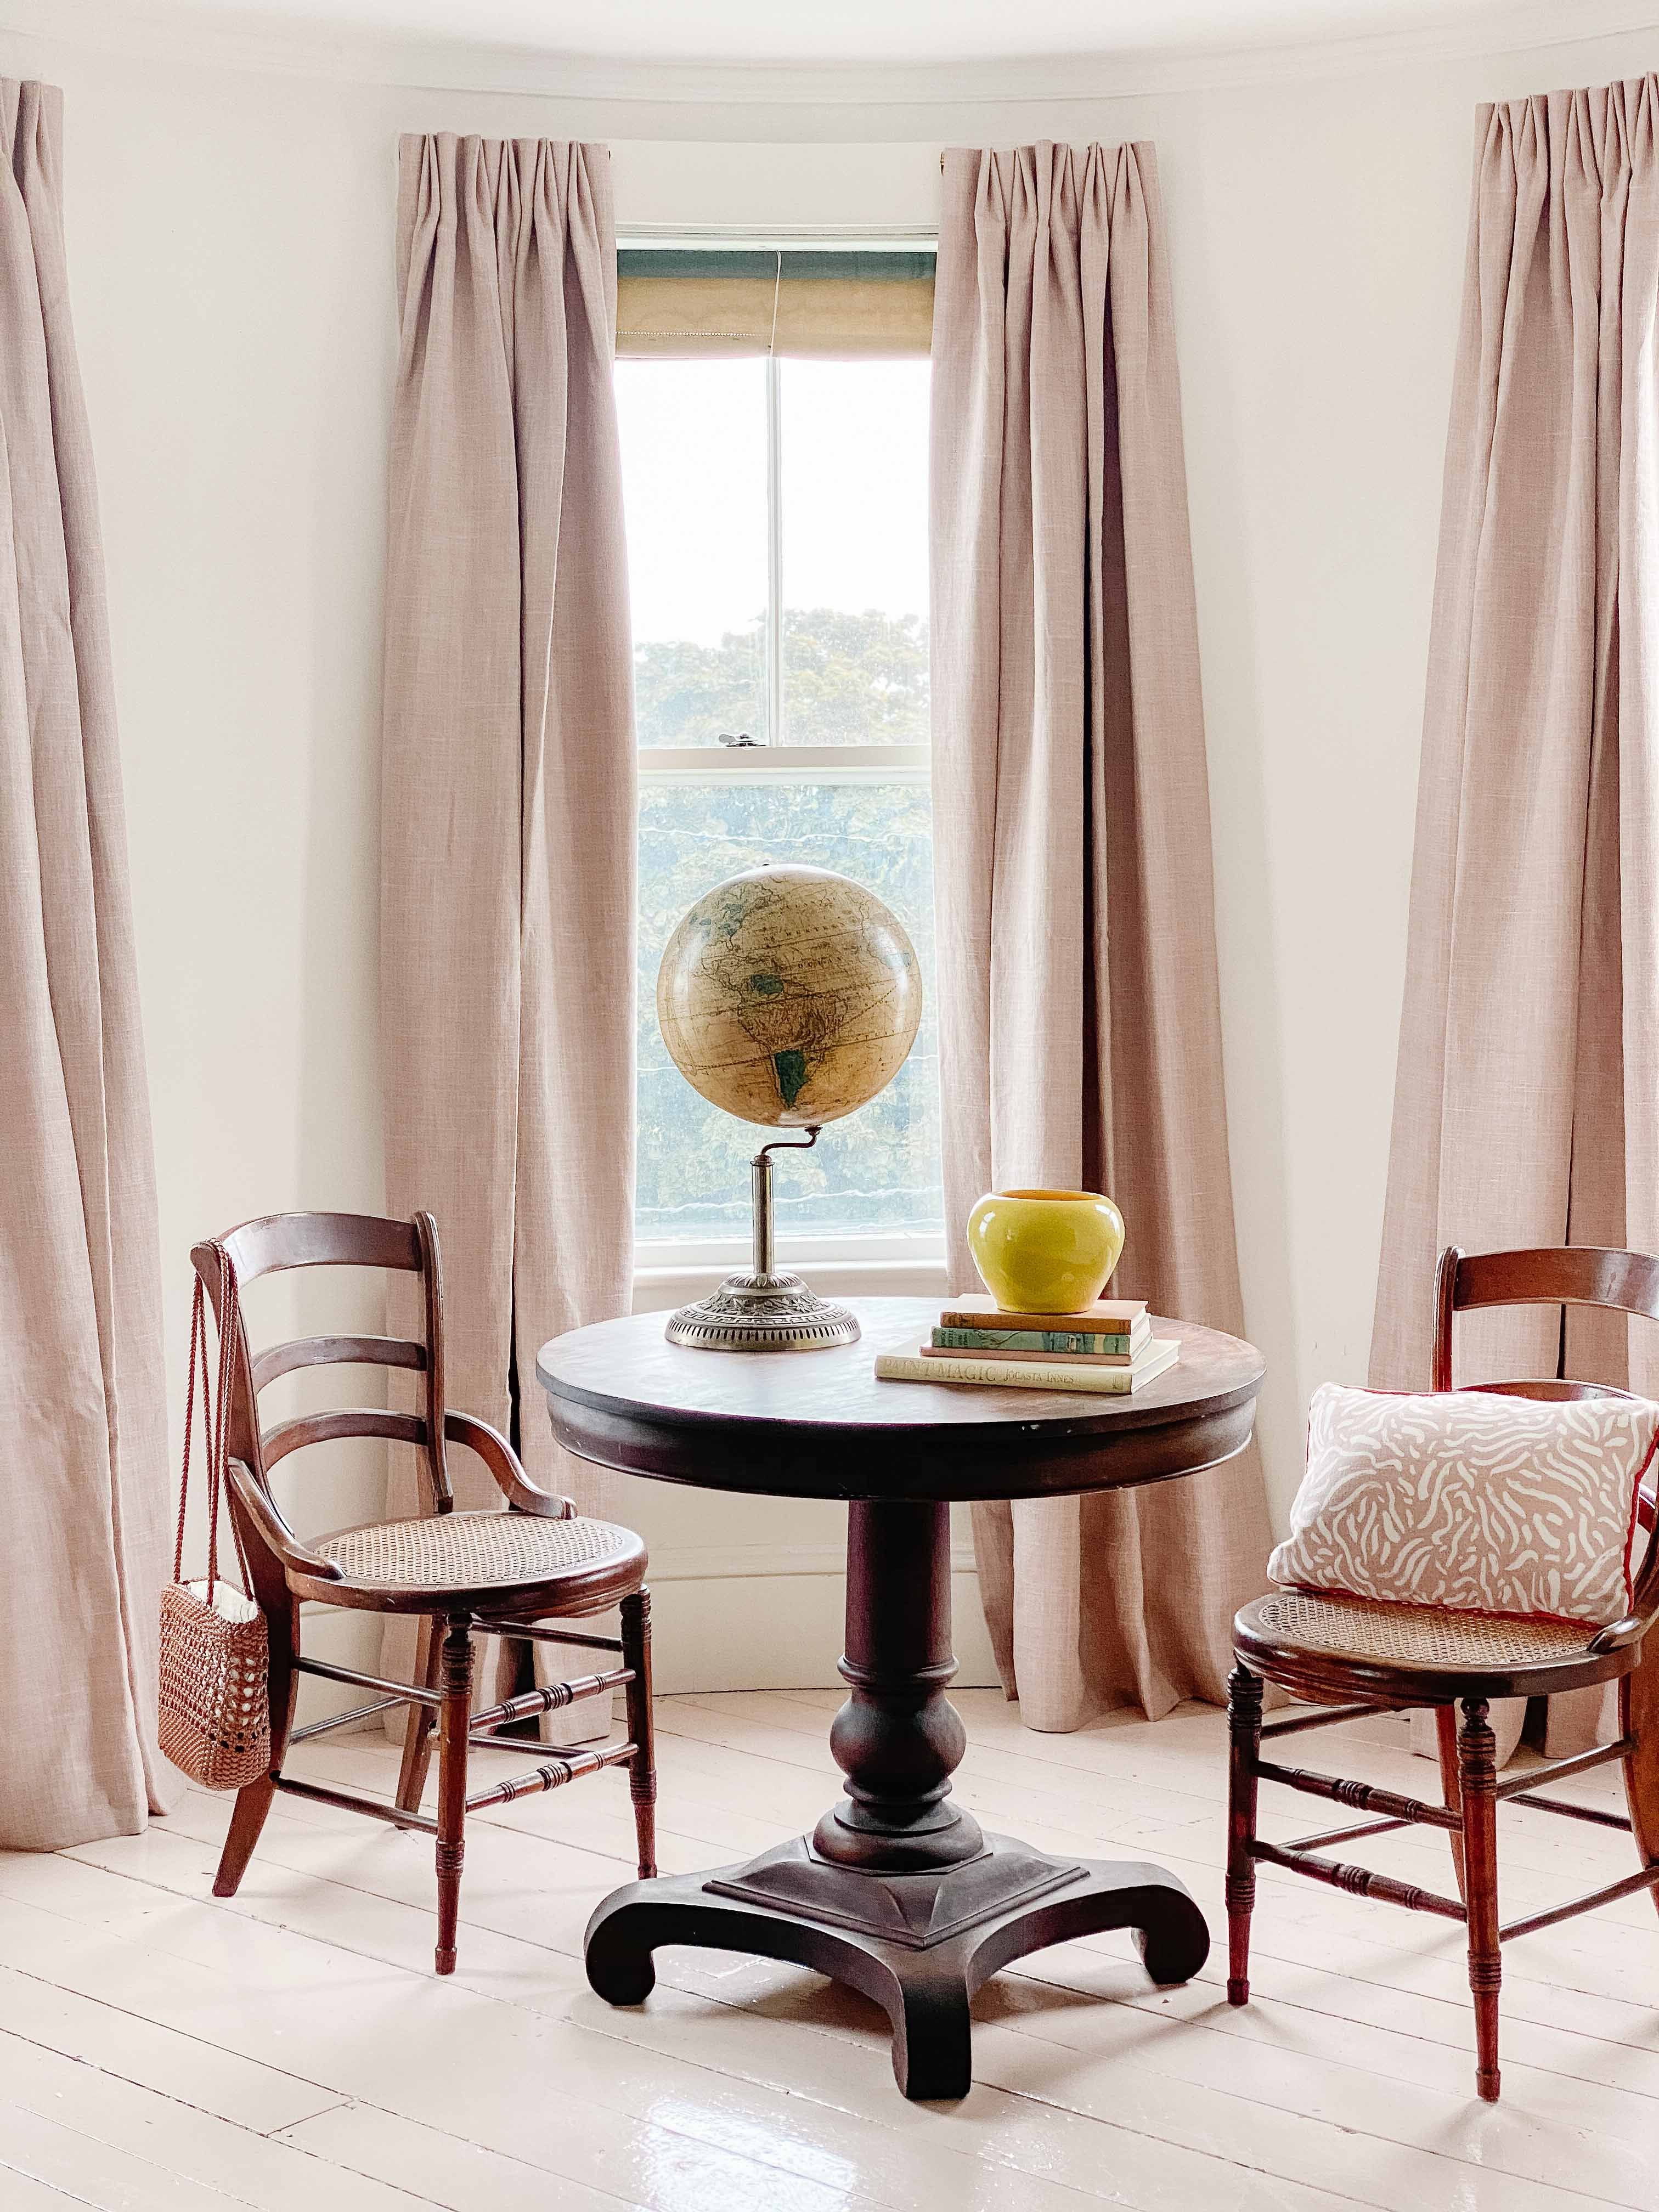 32 Best Window Treatment Ideas 2021 - Modern Curtain and Shade Ideas